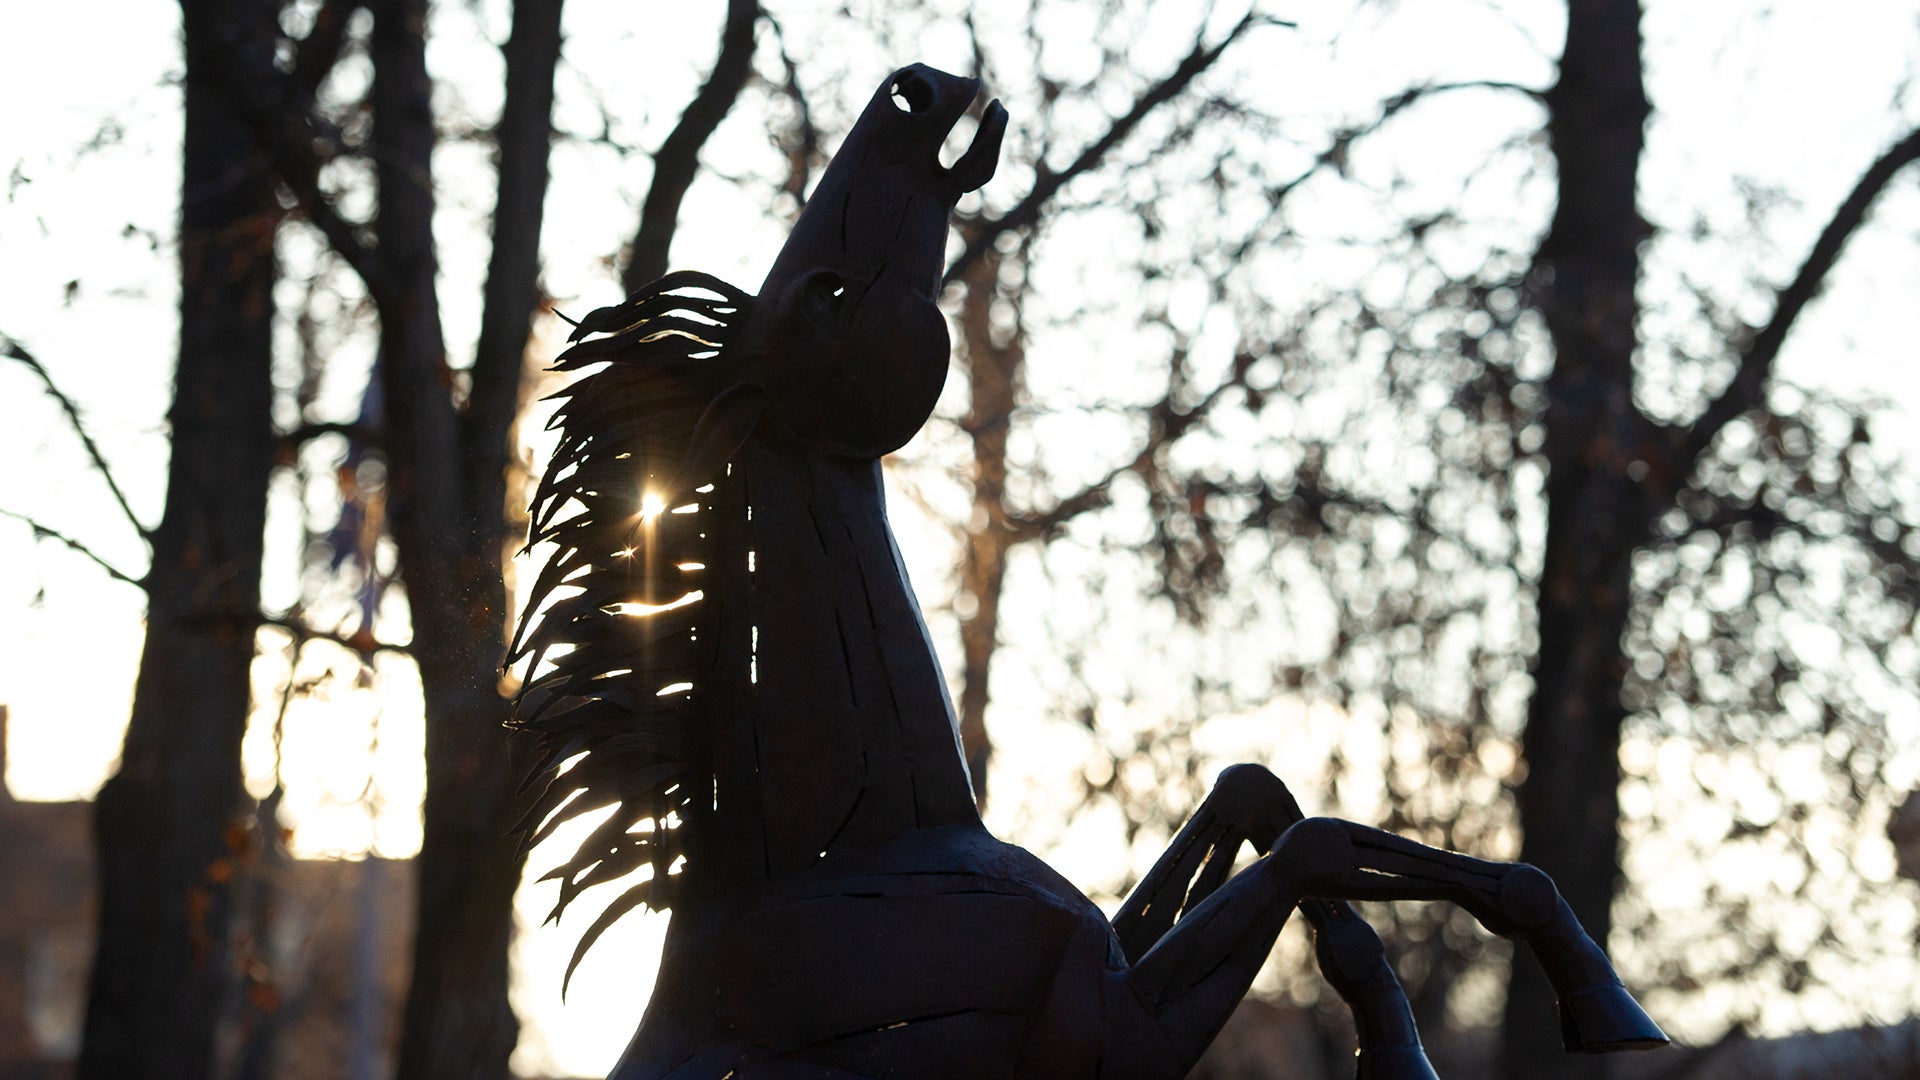 The Bronco horse statue